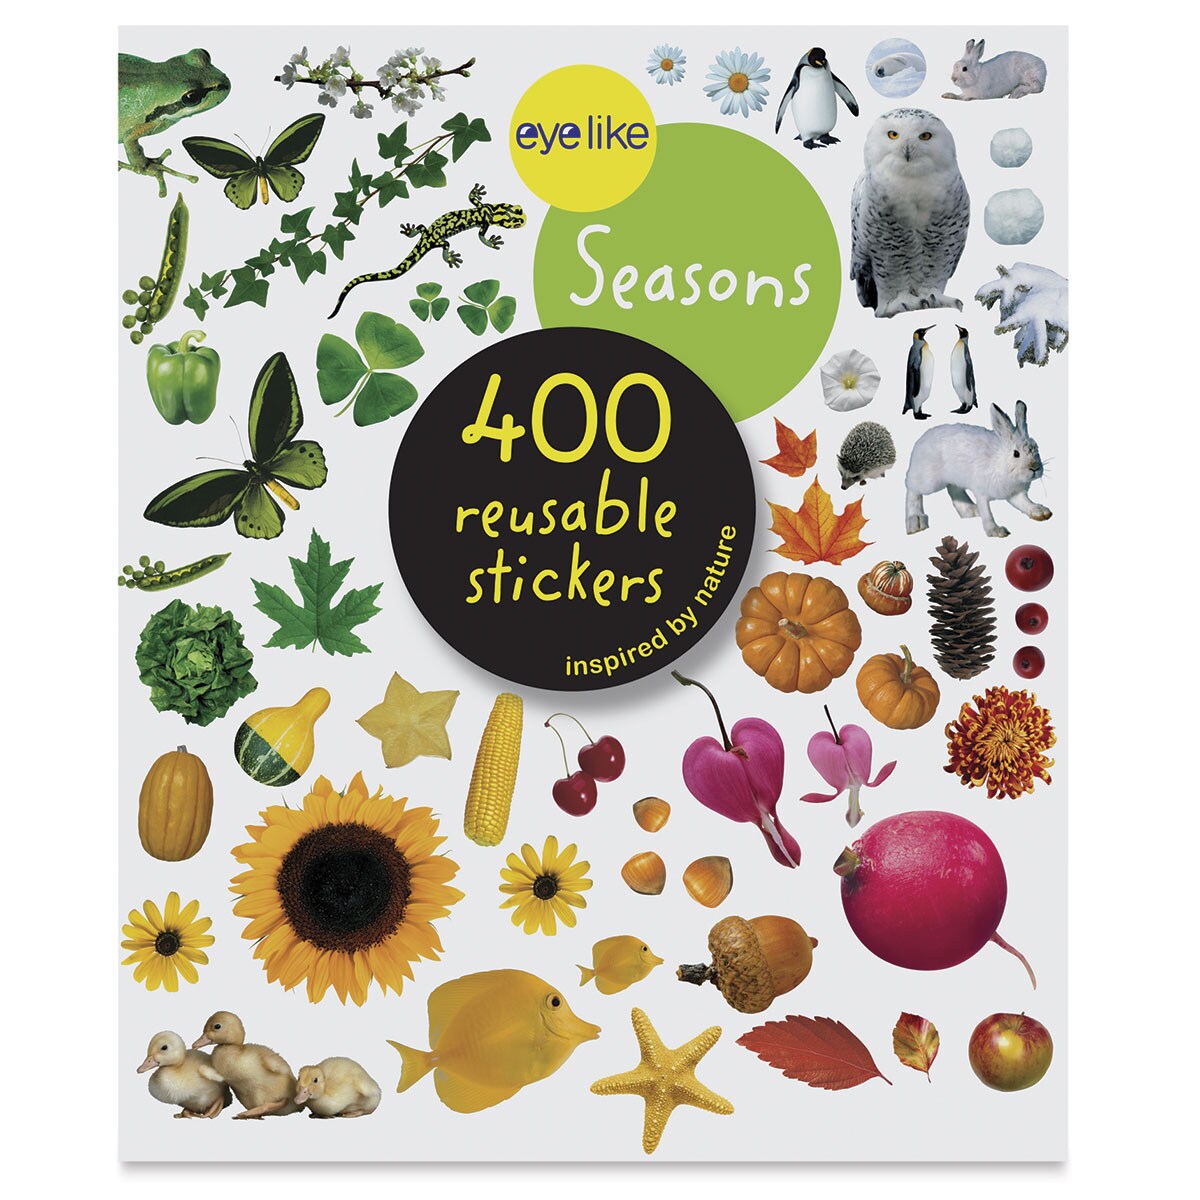 Eyelike Seasons Reusable Stickers